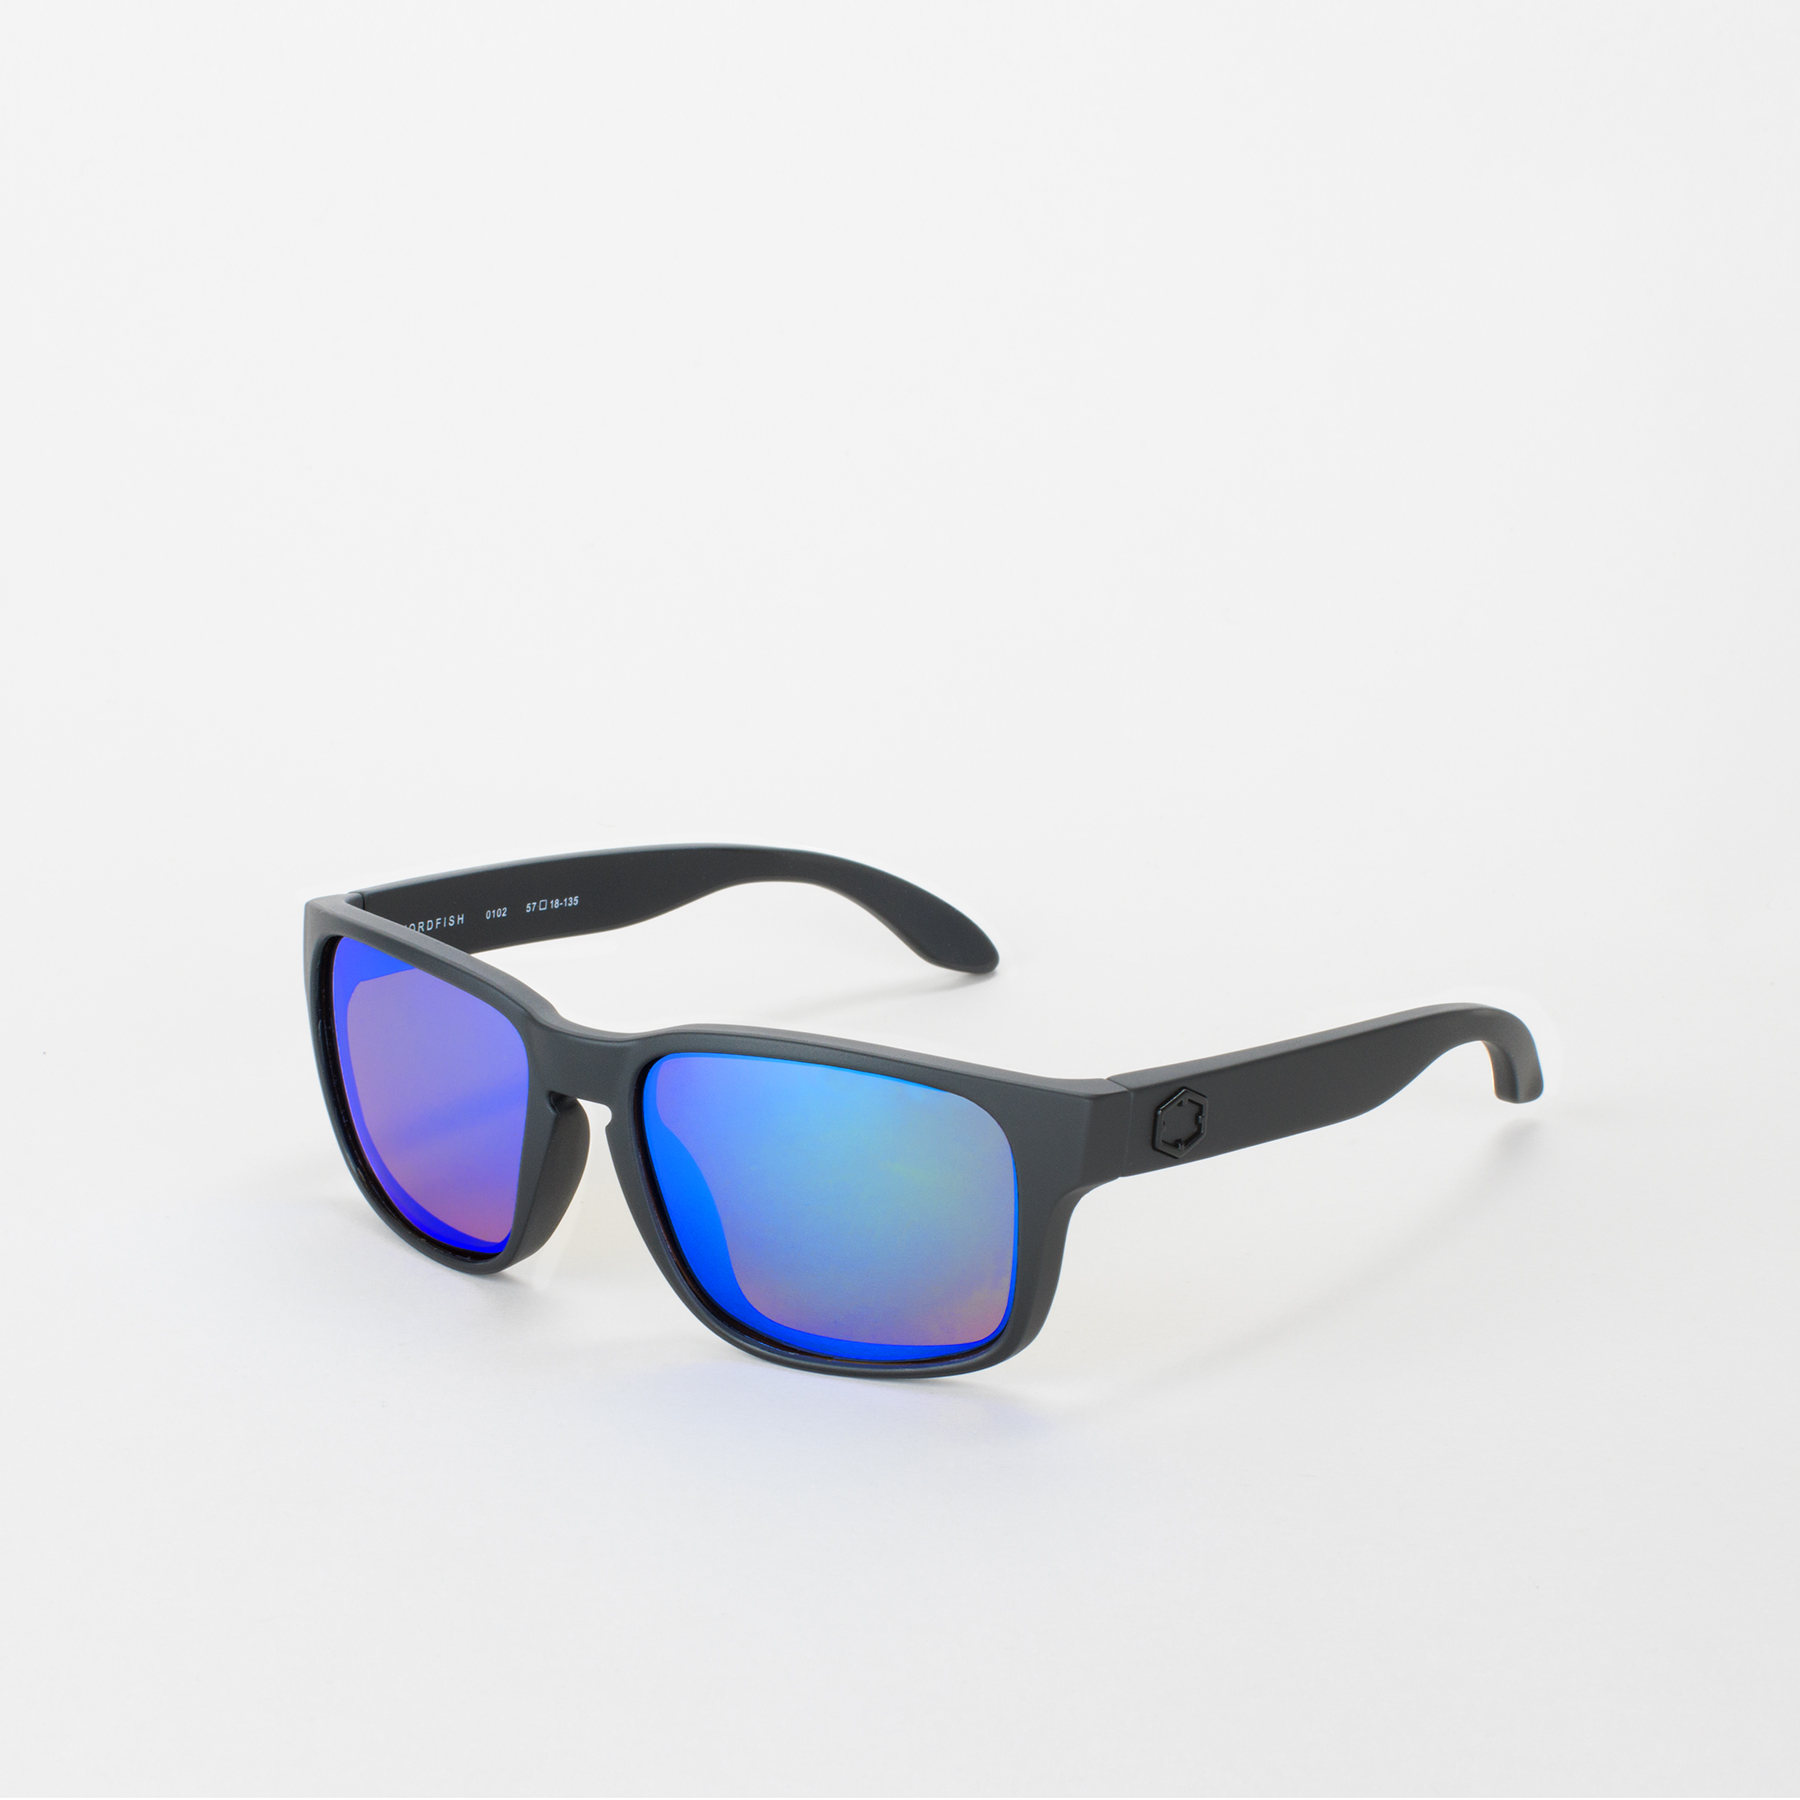 Swordfish black sunglasses with The One Gelo lenses